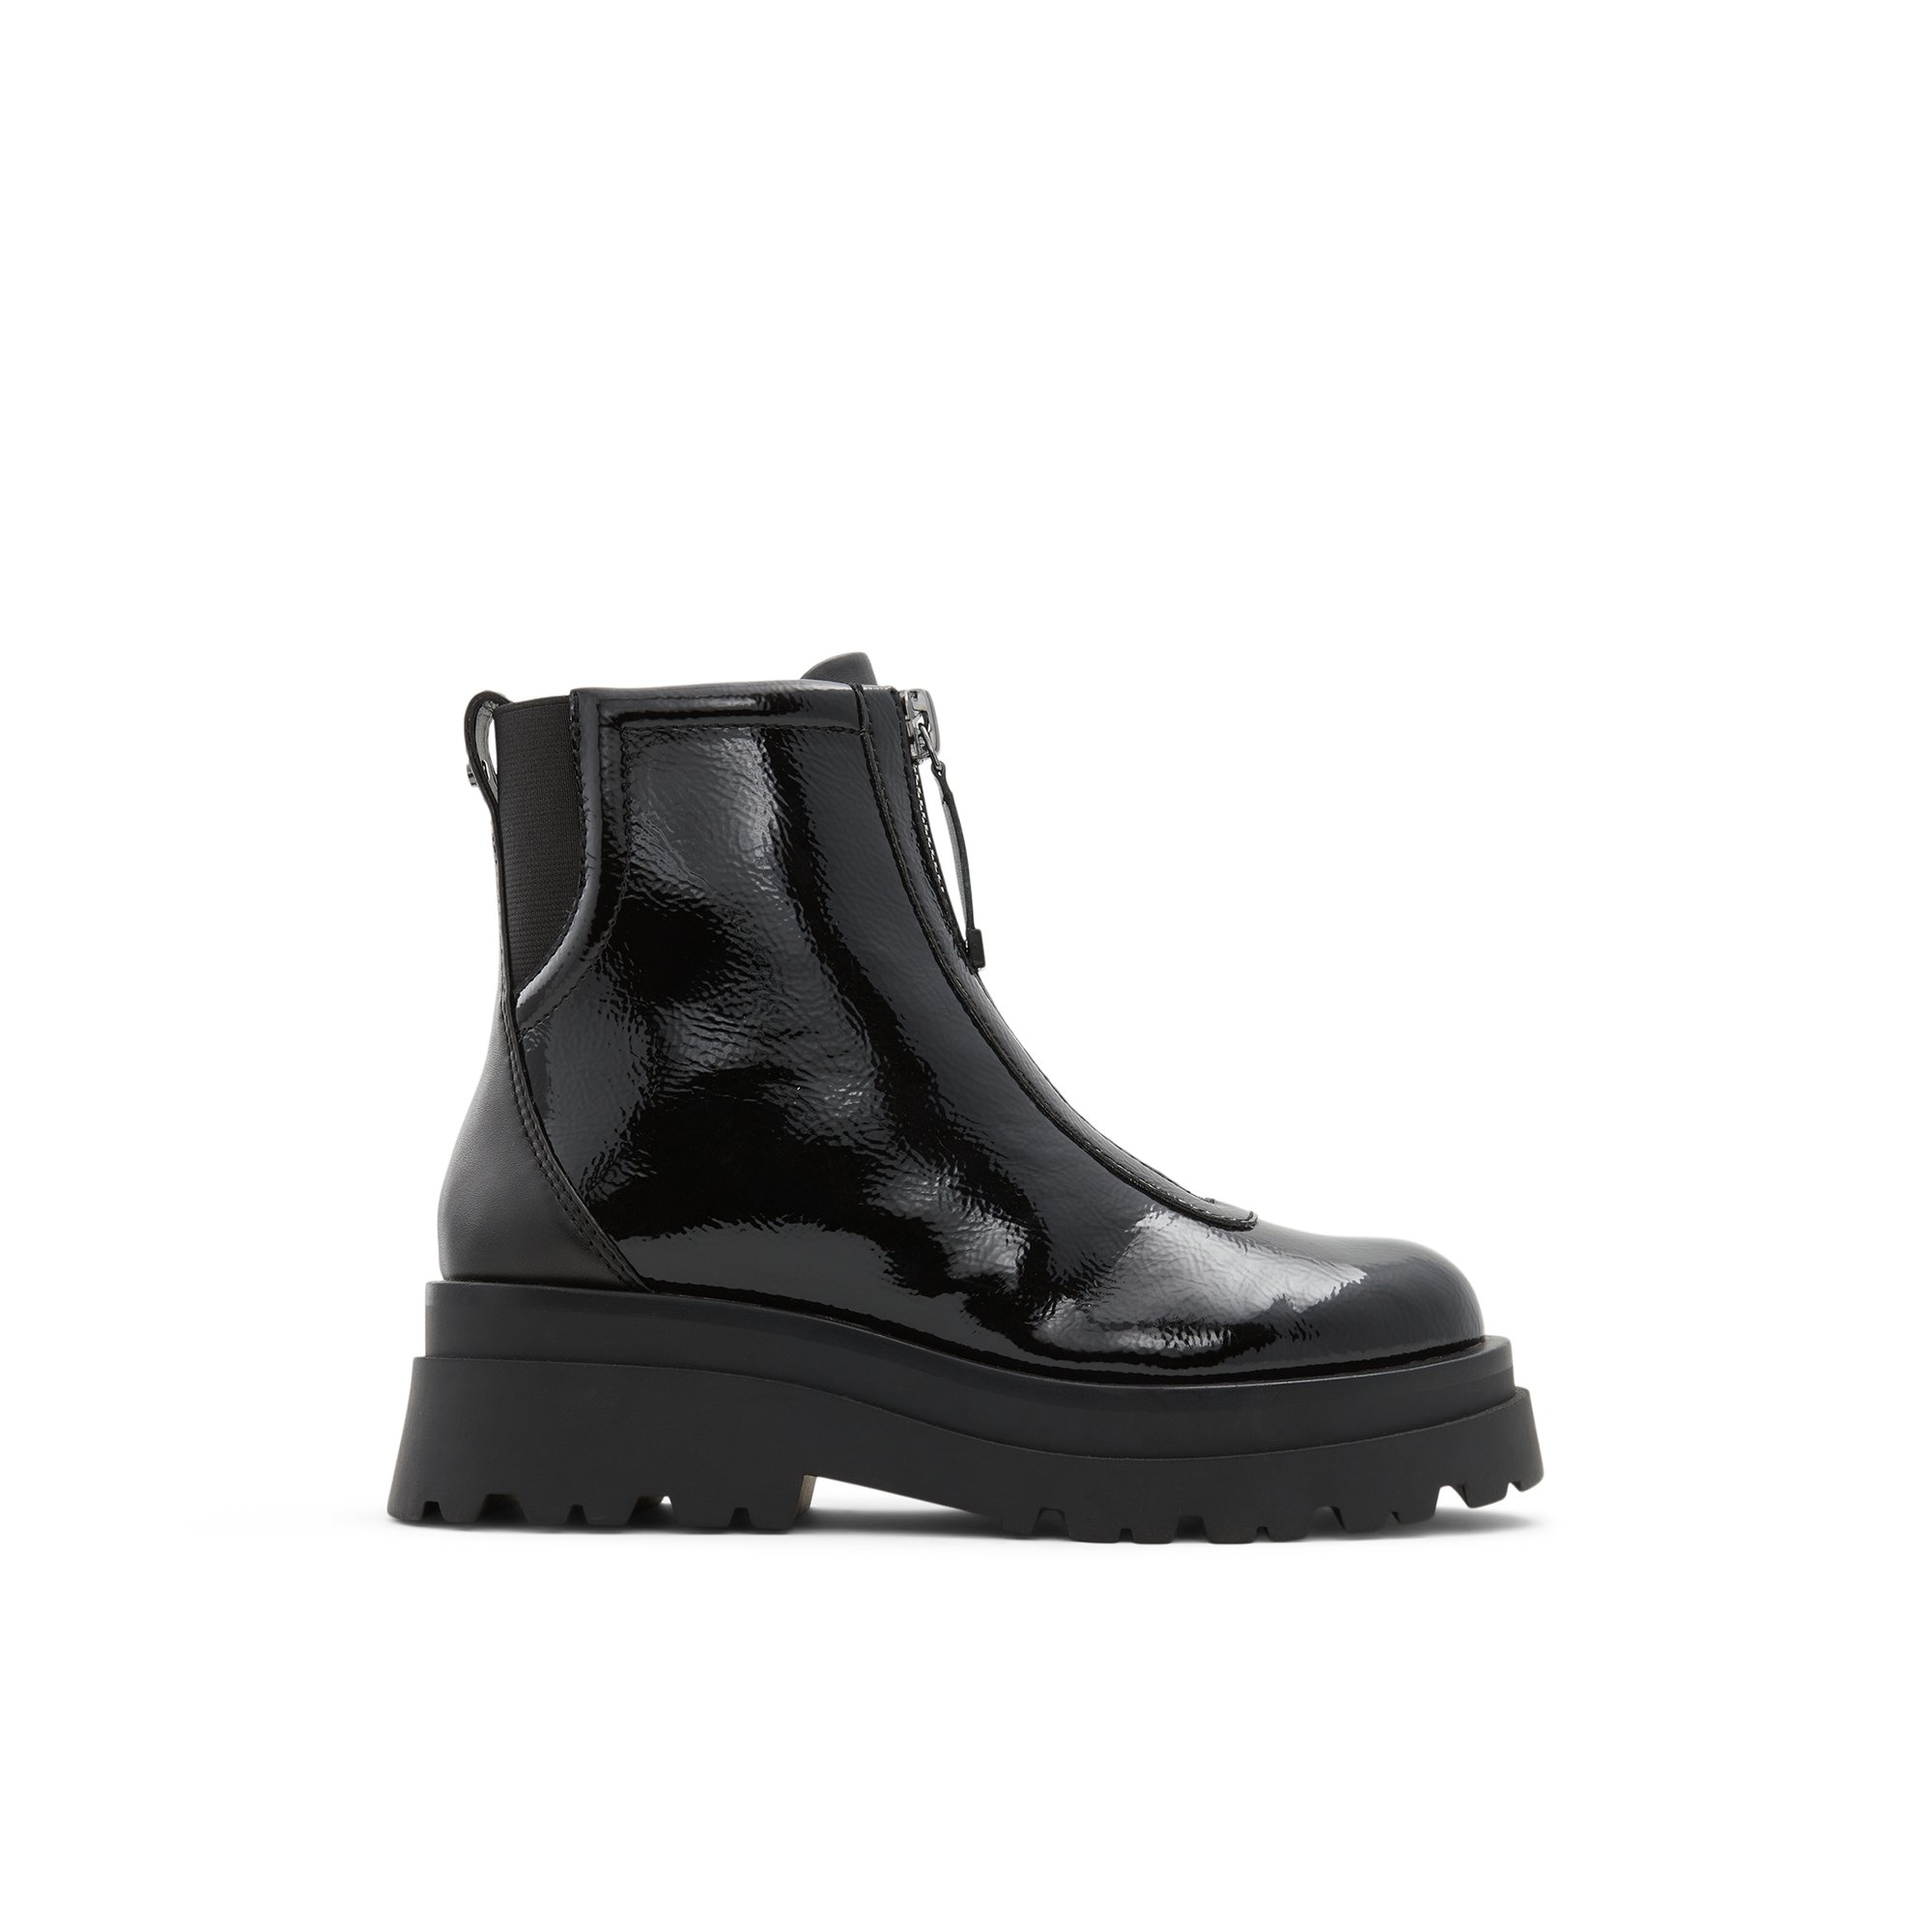 Image of ALDO Slicky - Women's Ankle Boot - Black, Size 6